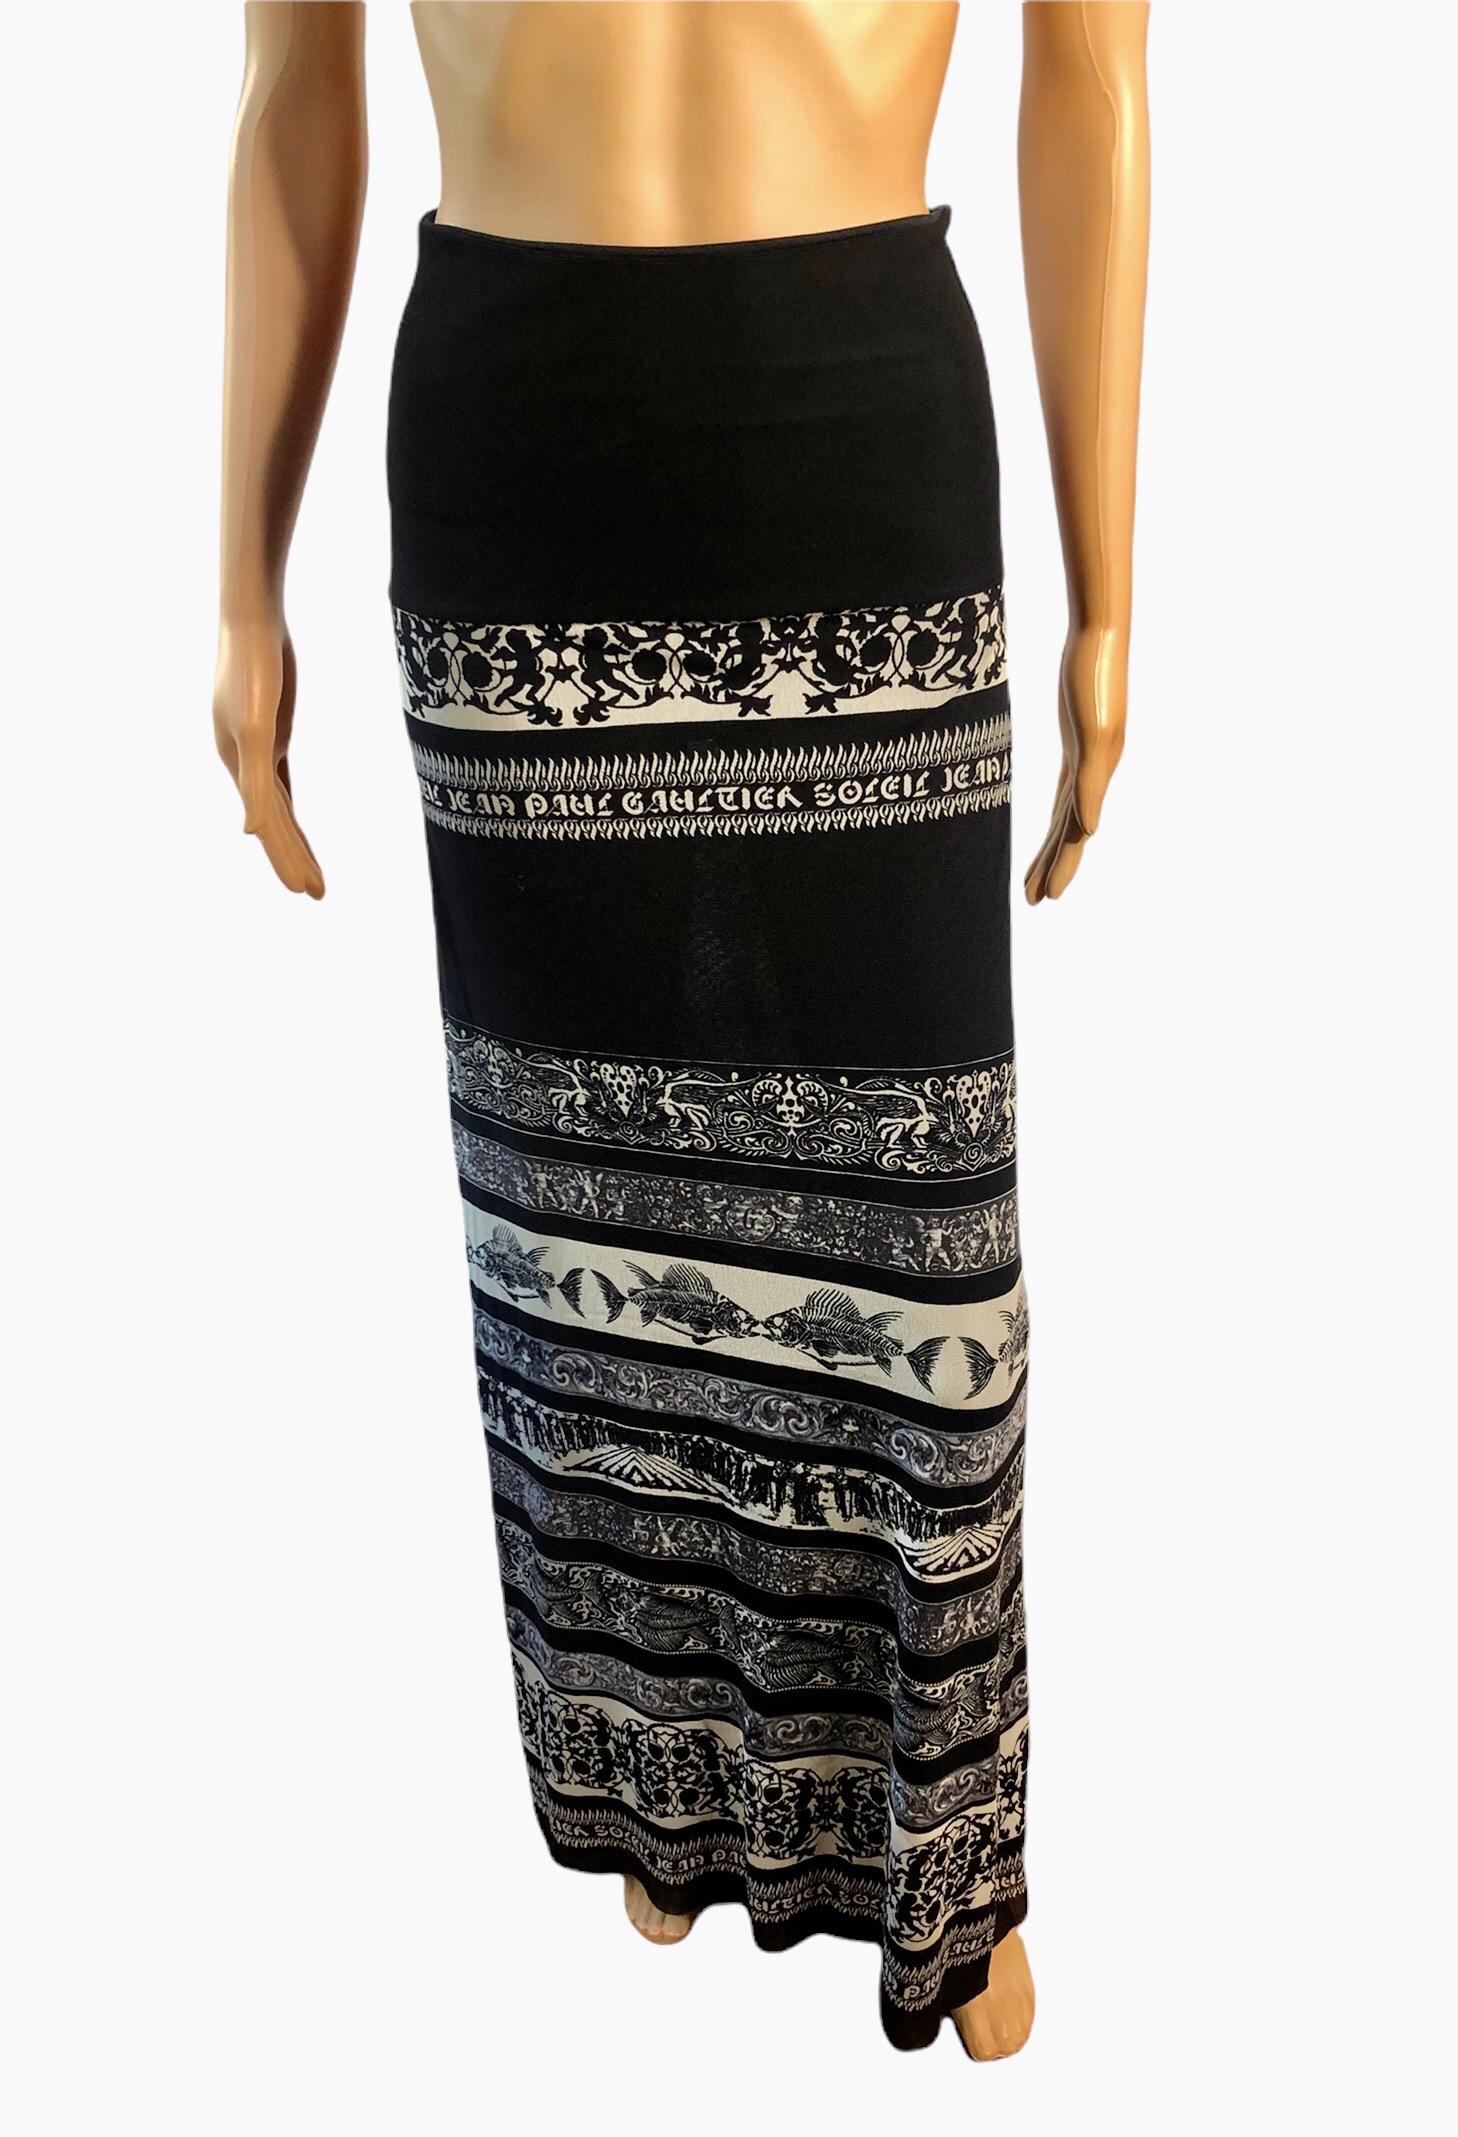 Jean Paul Gaultier Soleil Vintage Logo Semi-Sheer Mesh Maxi Skirt Dress In Good Condition For Sale In Naples, FL